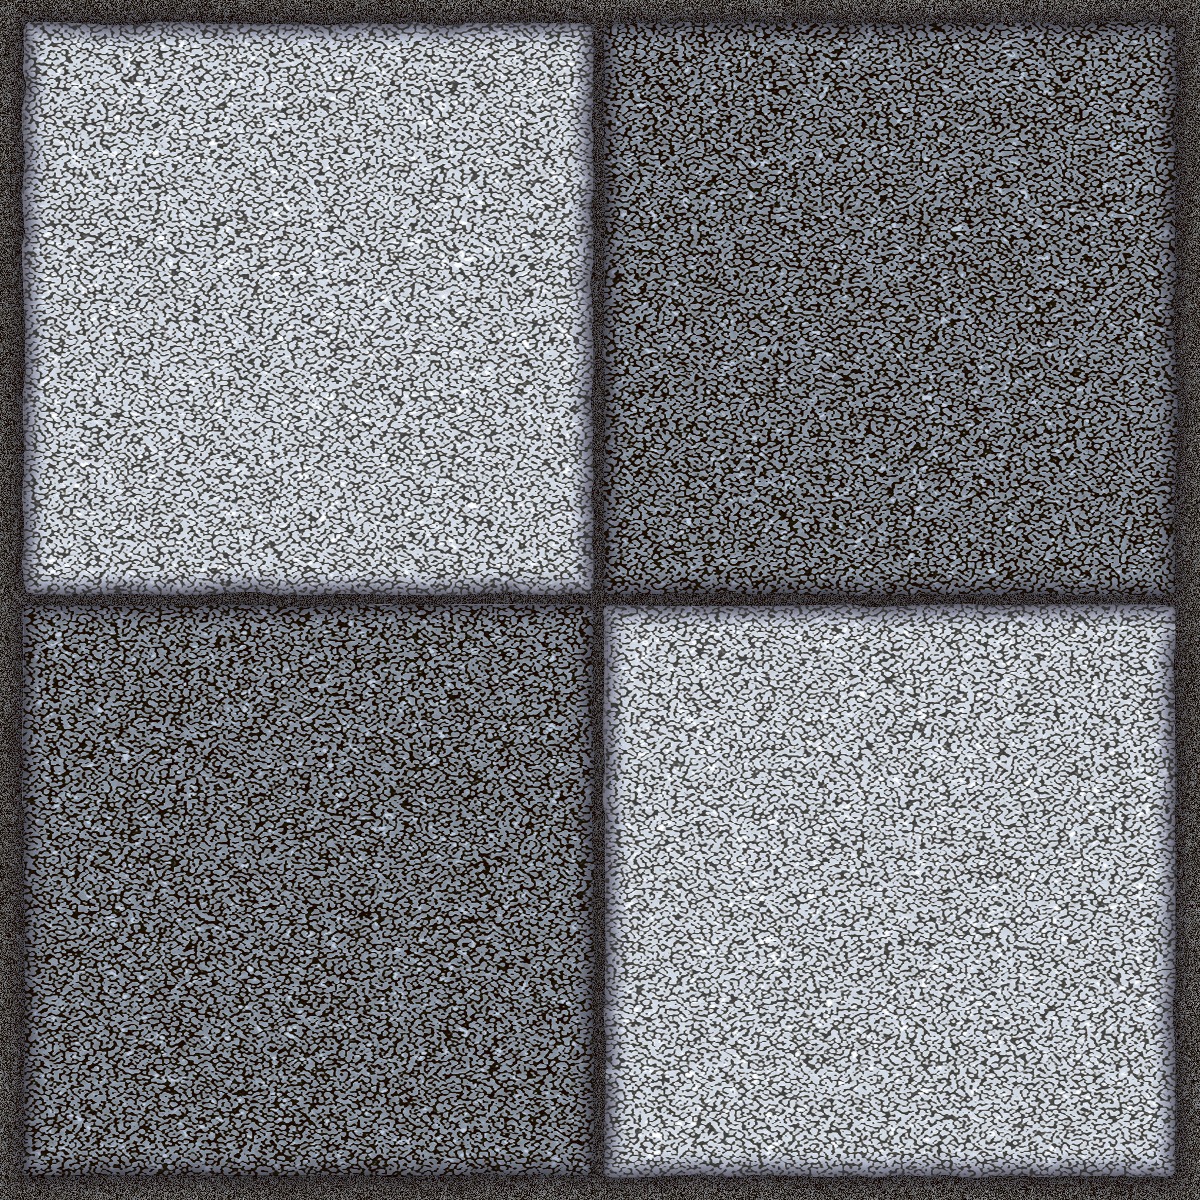 Rhino Series Pavers Tiles for Kitchen Tiles, Balcony Tiles, Parking Tiles, Outdoor Tiles, Terrace Tiles, Porch Tiles, High Traffic Tiles, Commercial/Office, Outdoor Area, Outdoor/Terrace, Porch/Parking